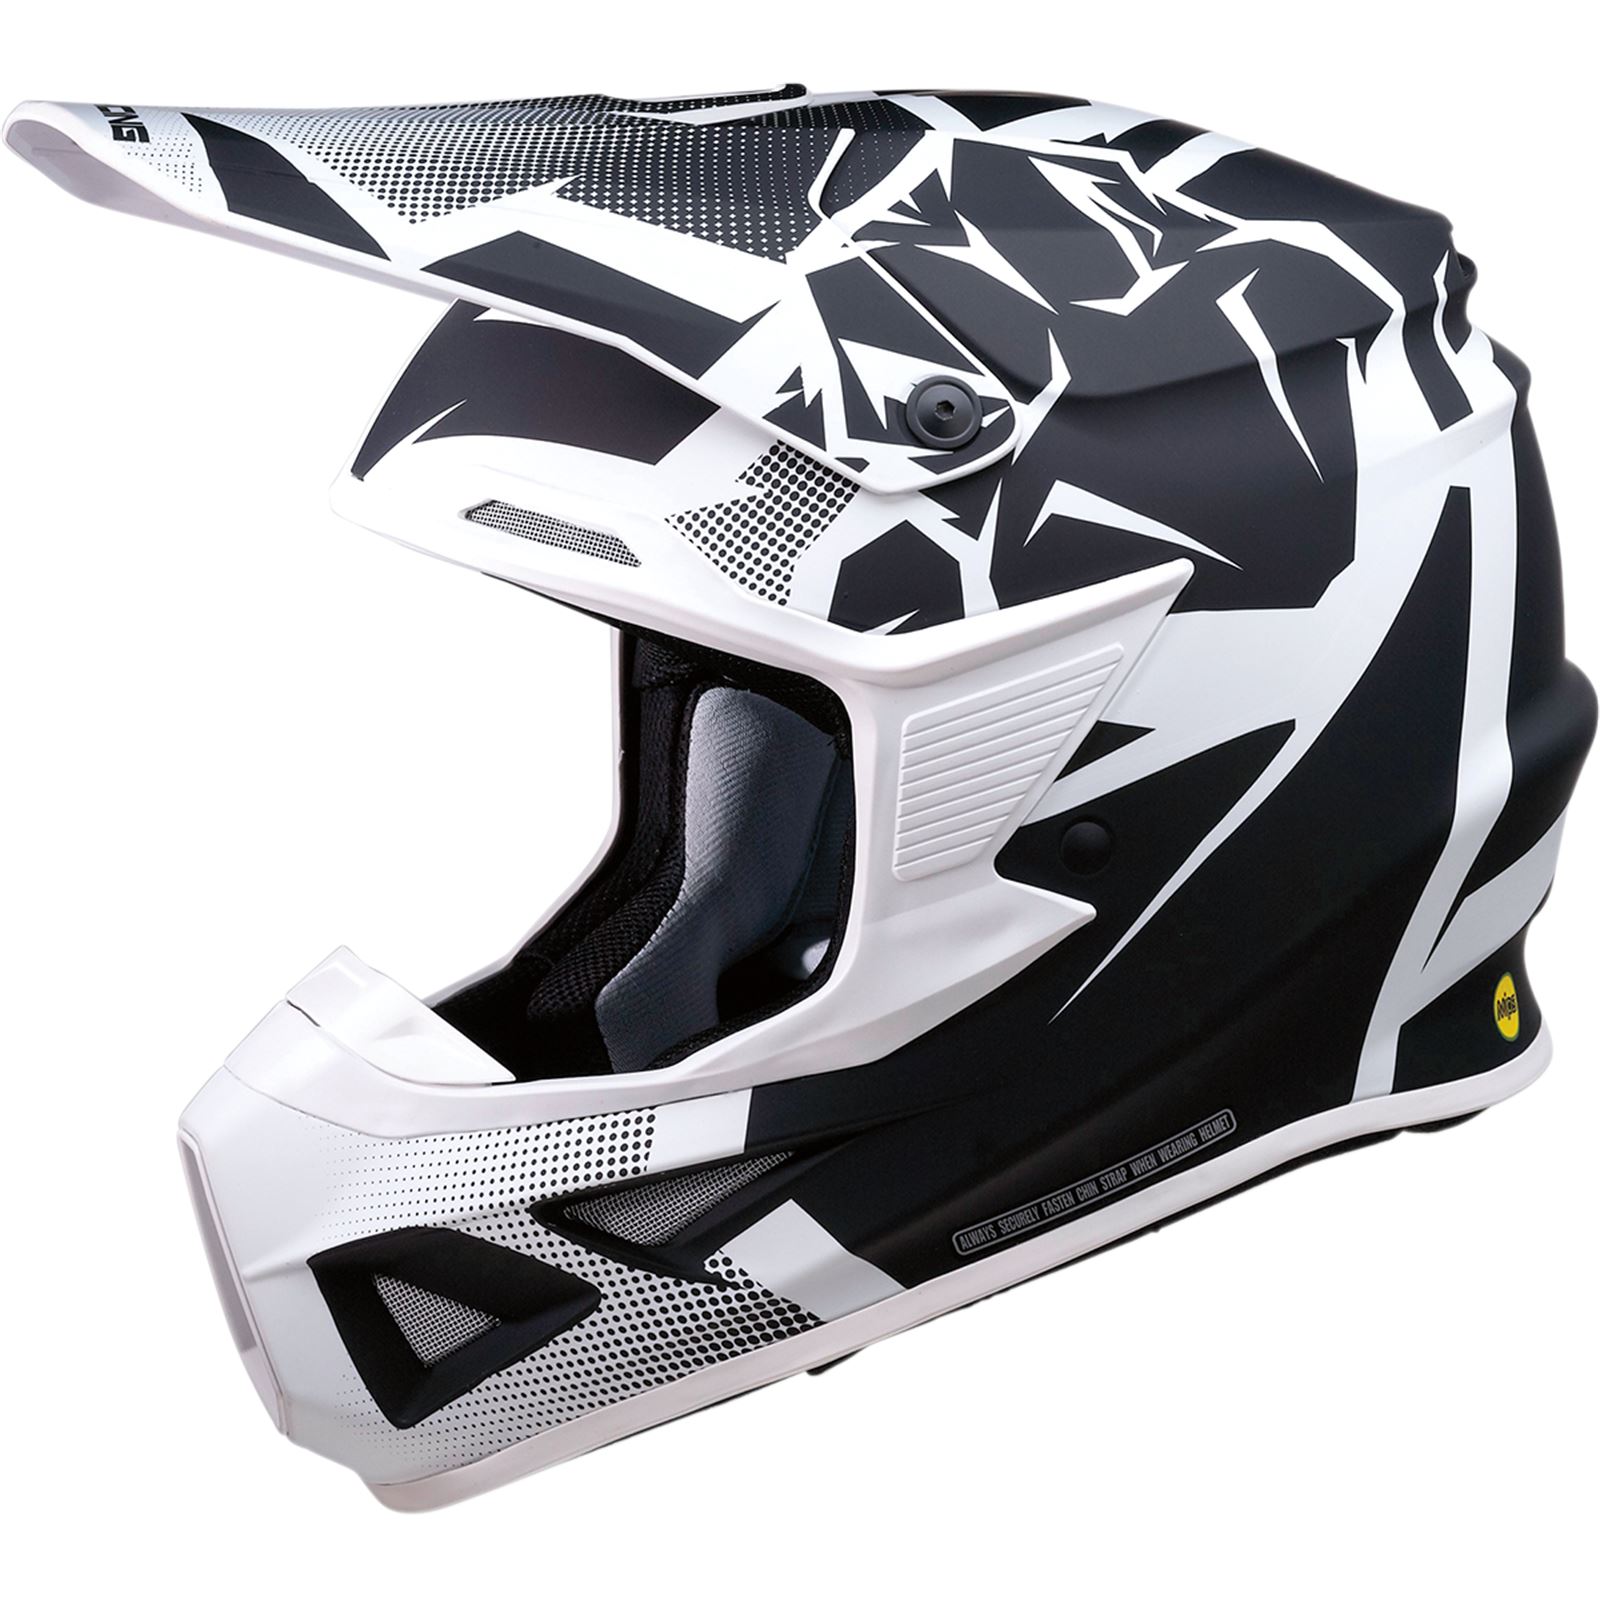 Moose Racing F.I. Agroid Helmet - MIPS - White/Black - XL